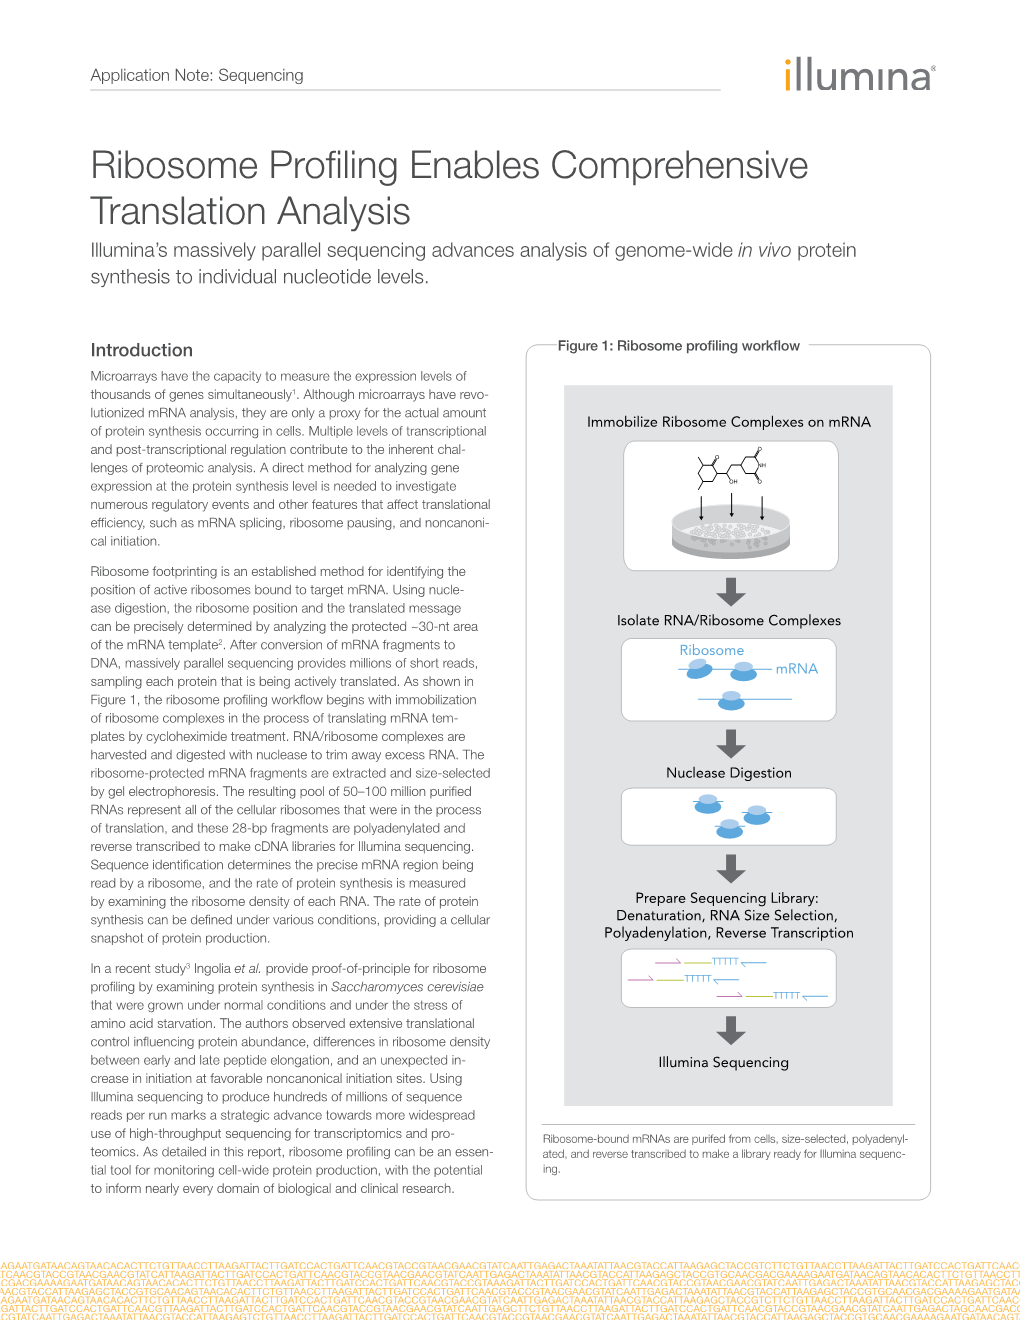 Ribosome Profiling Enables Comprehensive Translation Analysis